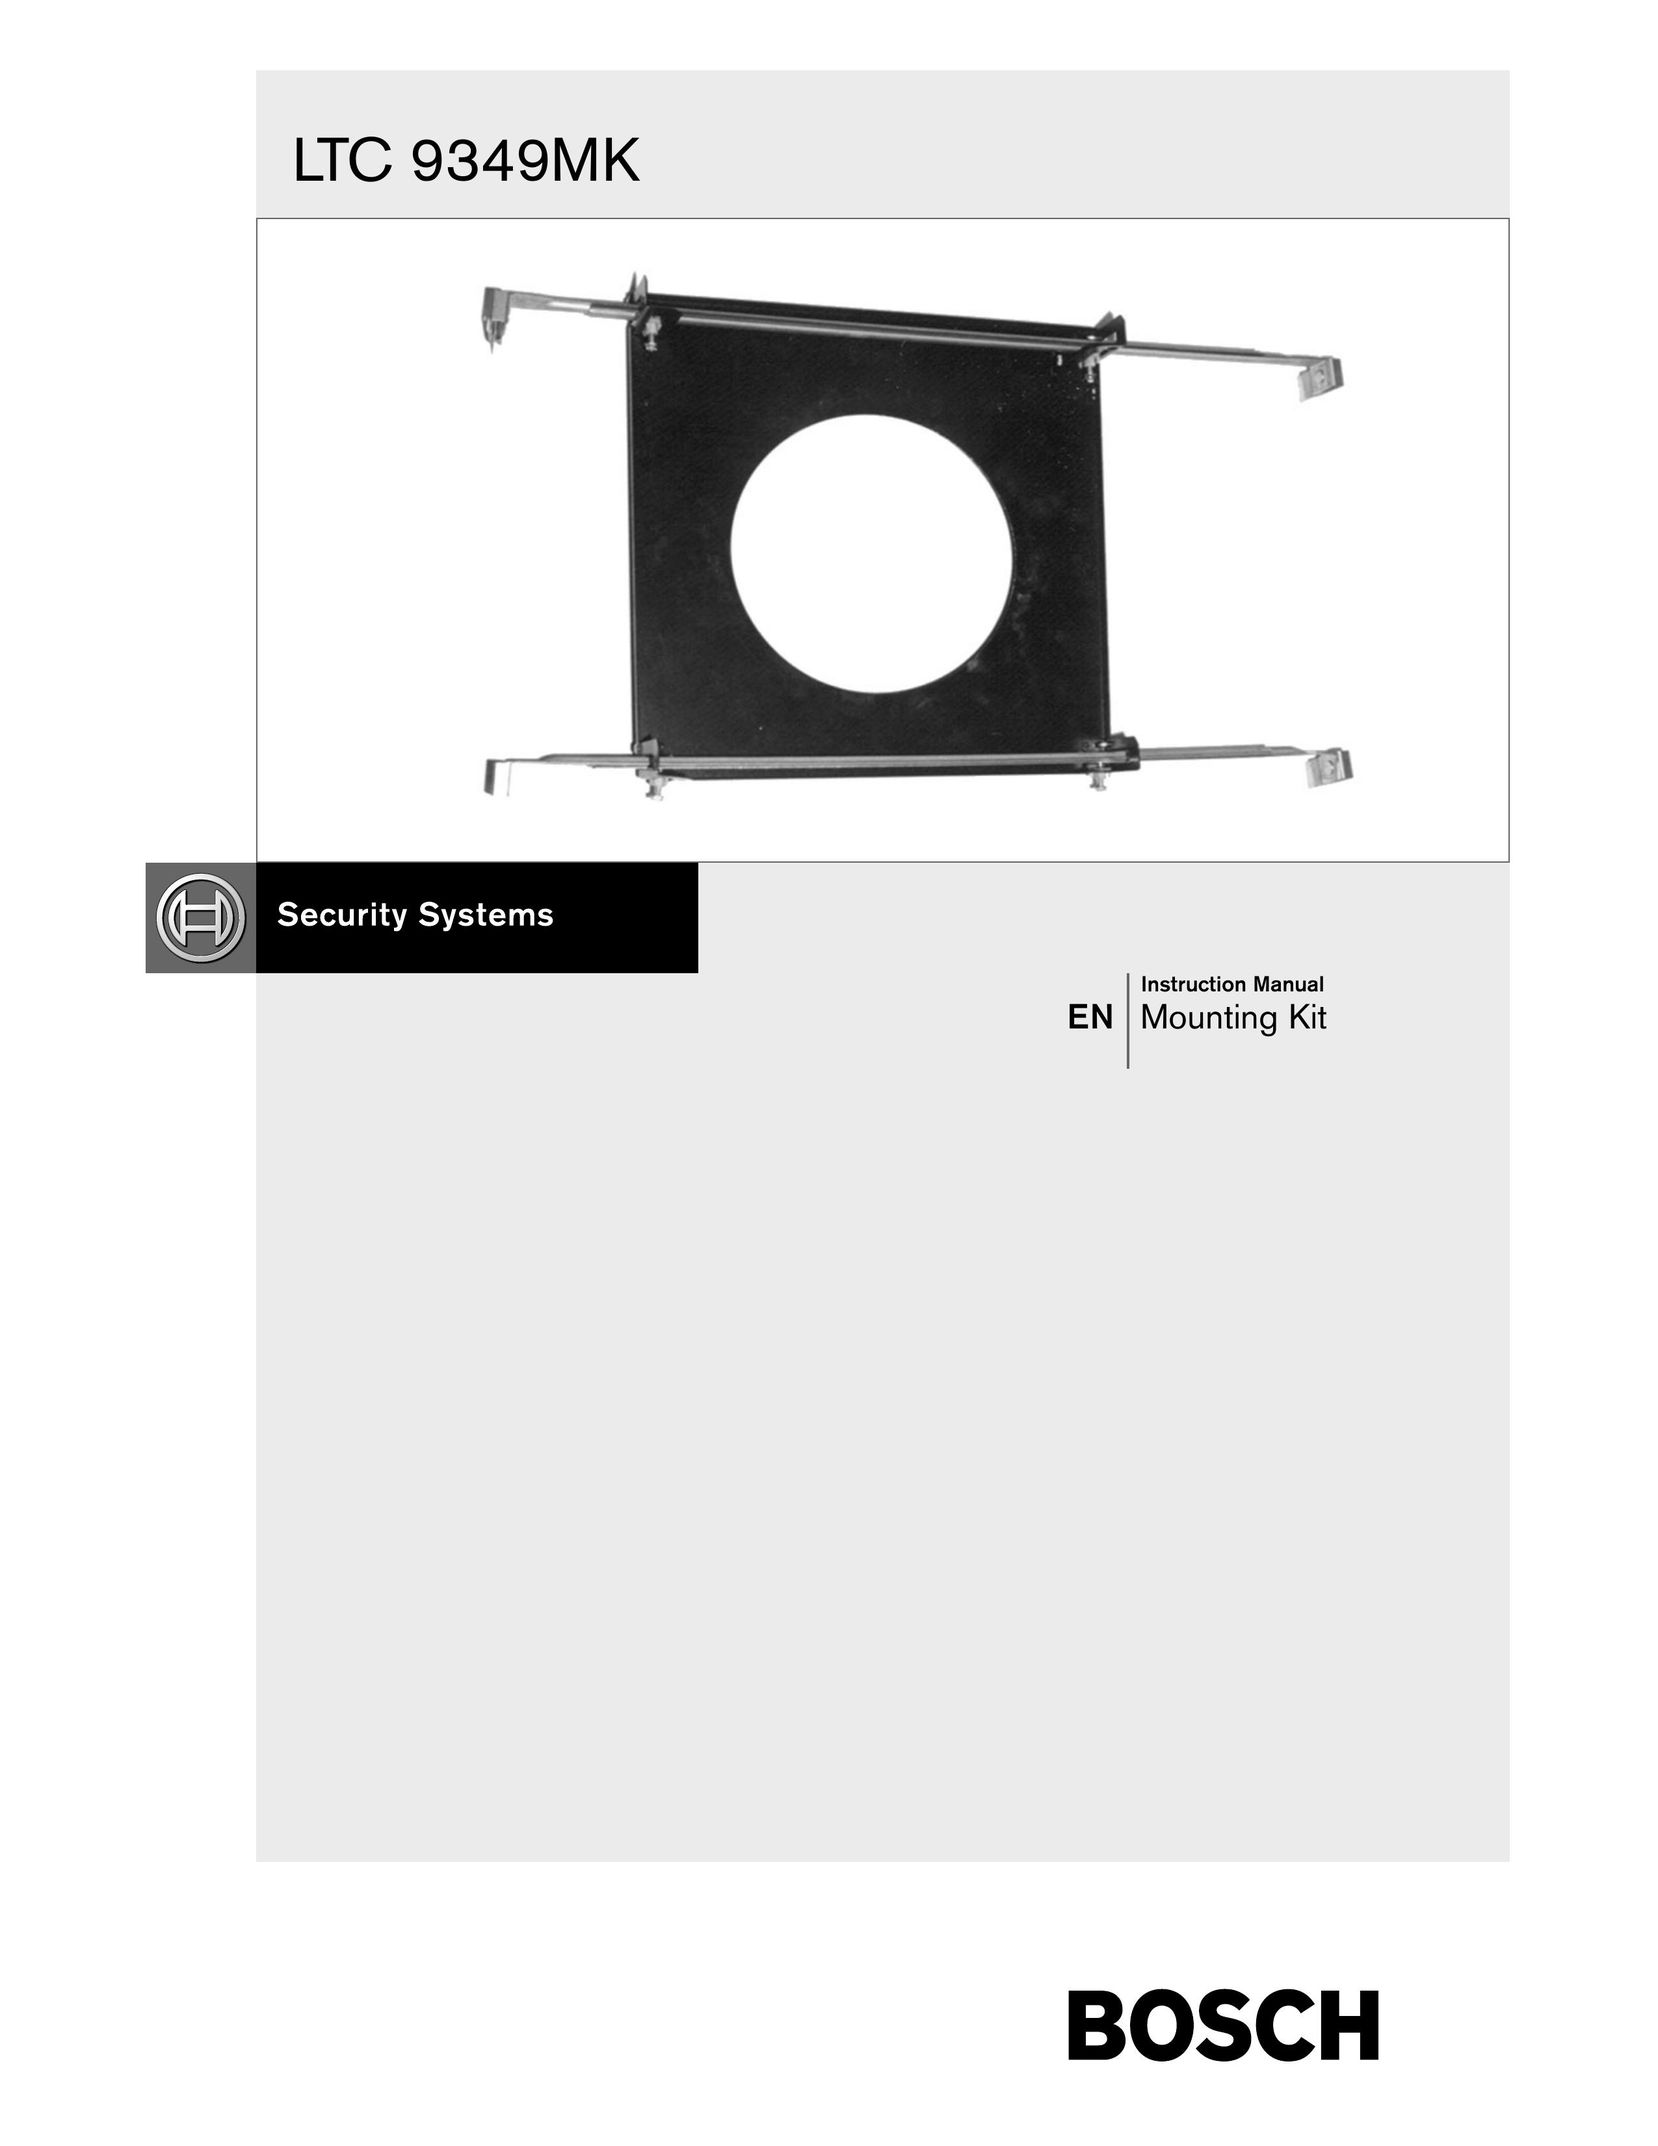 Bosch Appliances LTC 9349MK TV Mount User Manual